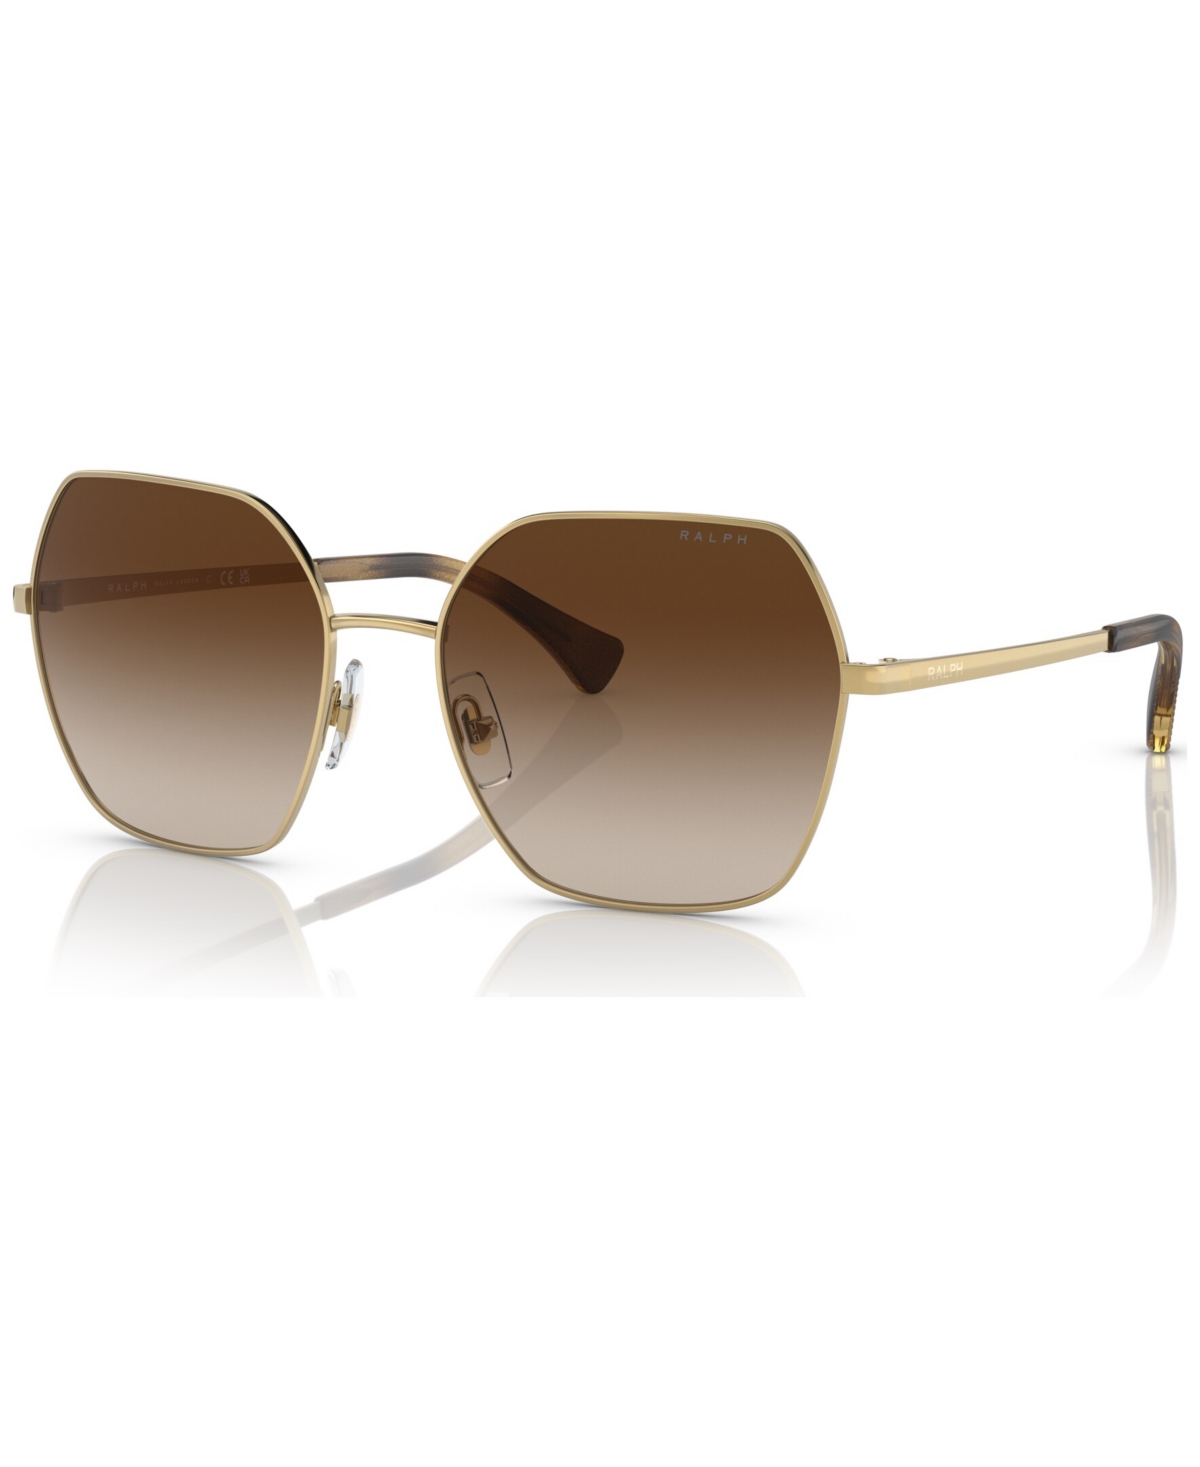 Women's Sunglasses, RA4138 - Shiny Gold-Tone